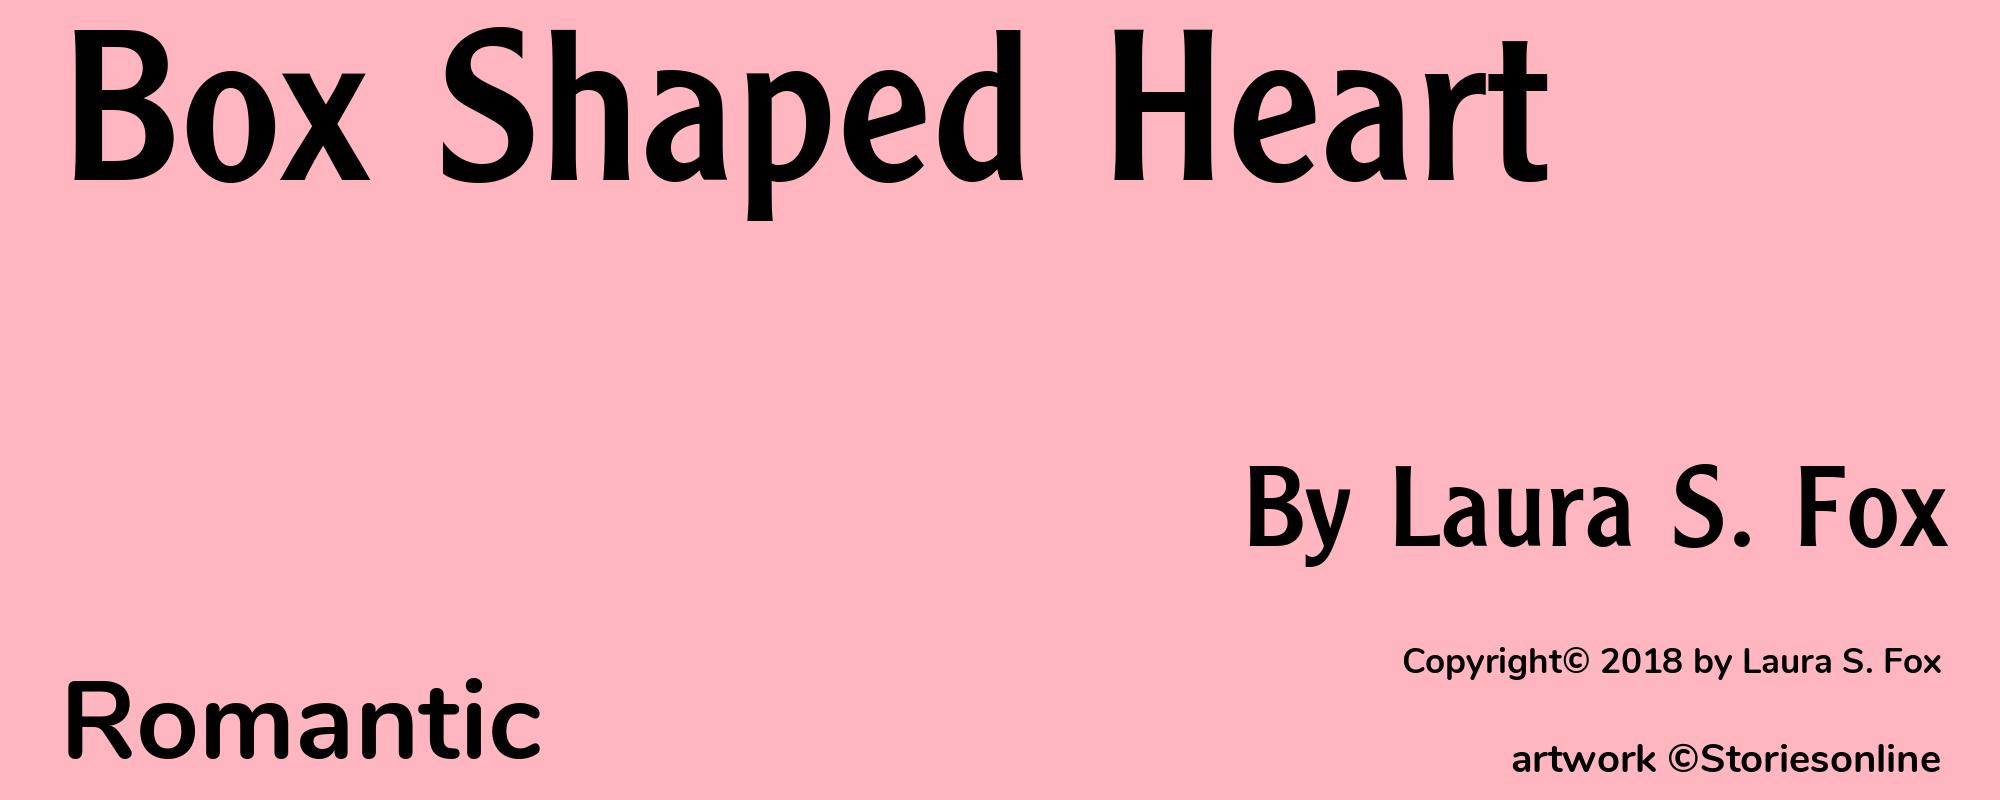 Box Shaped Heart - Cover